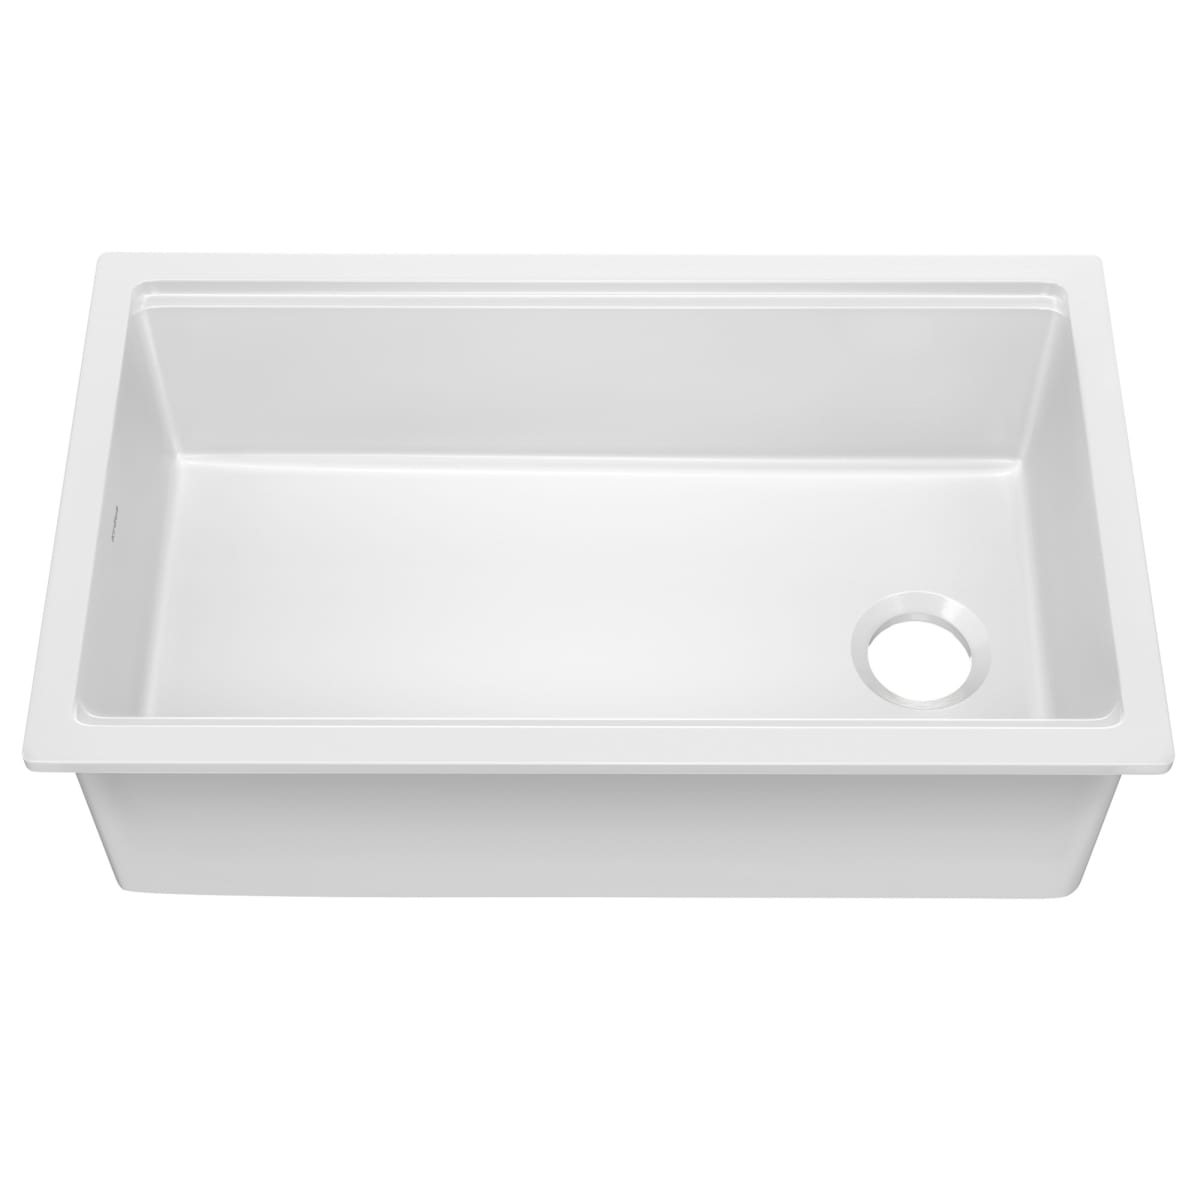 Kraus Turino Workstation Single Bowl Kitchen Sink 33 Farmhouse Reversible Apron Front Fireclay in Gloss White